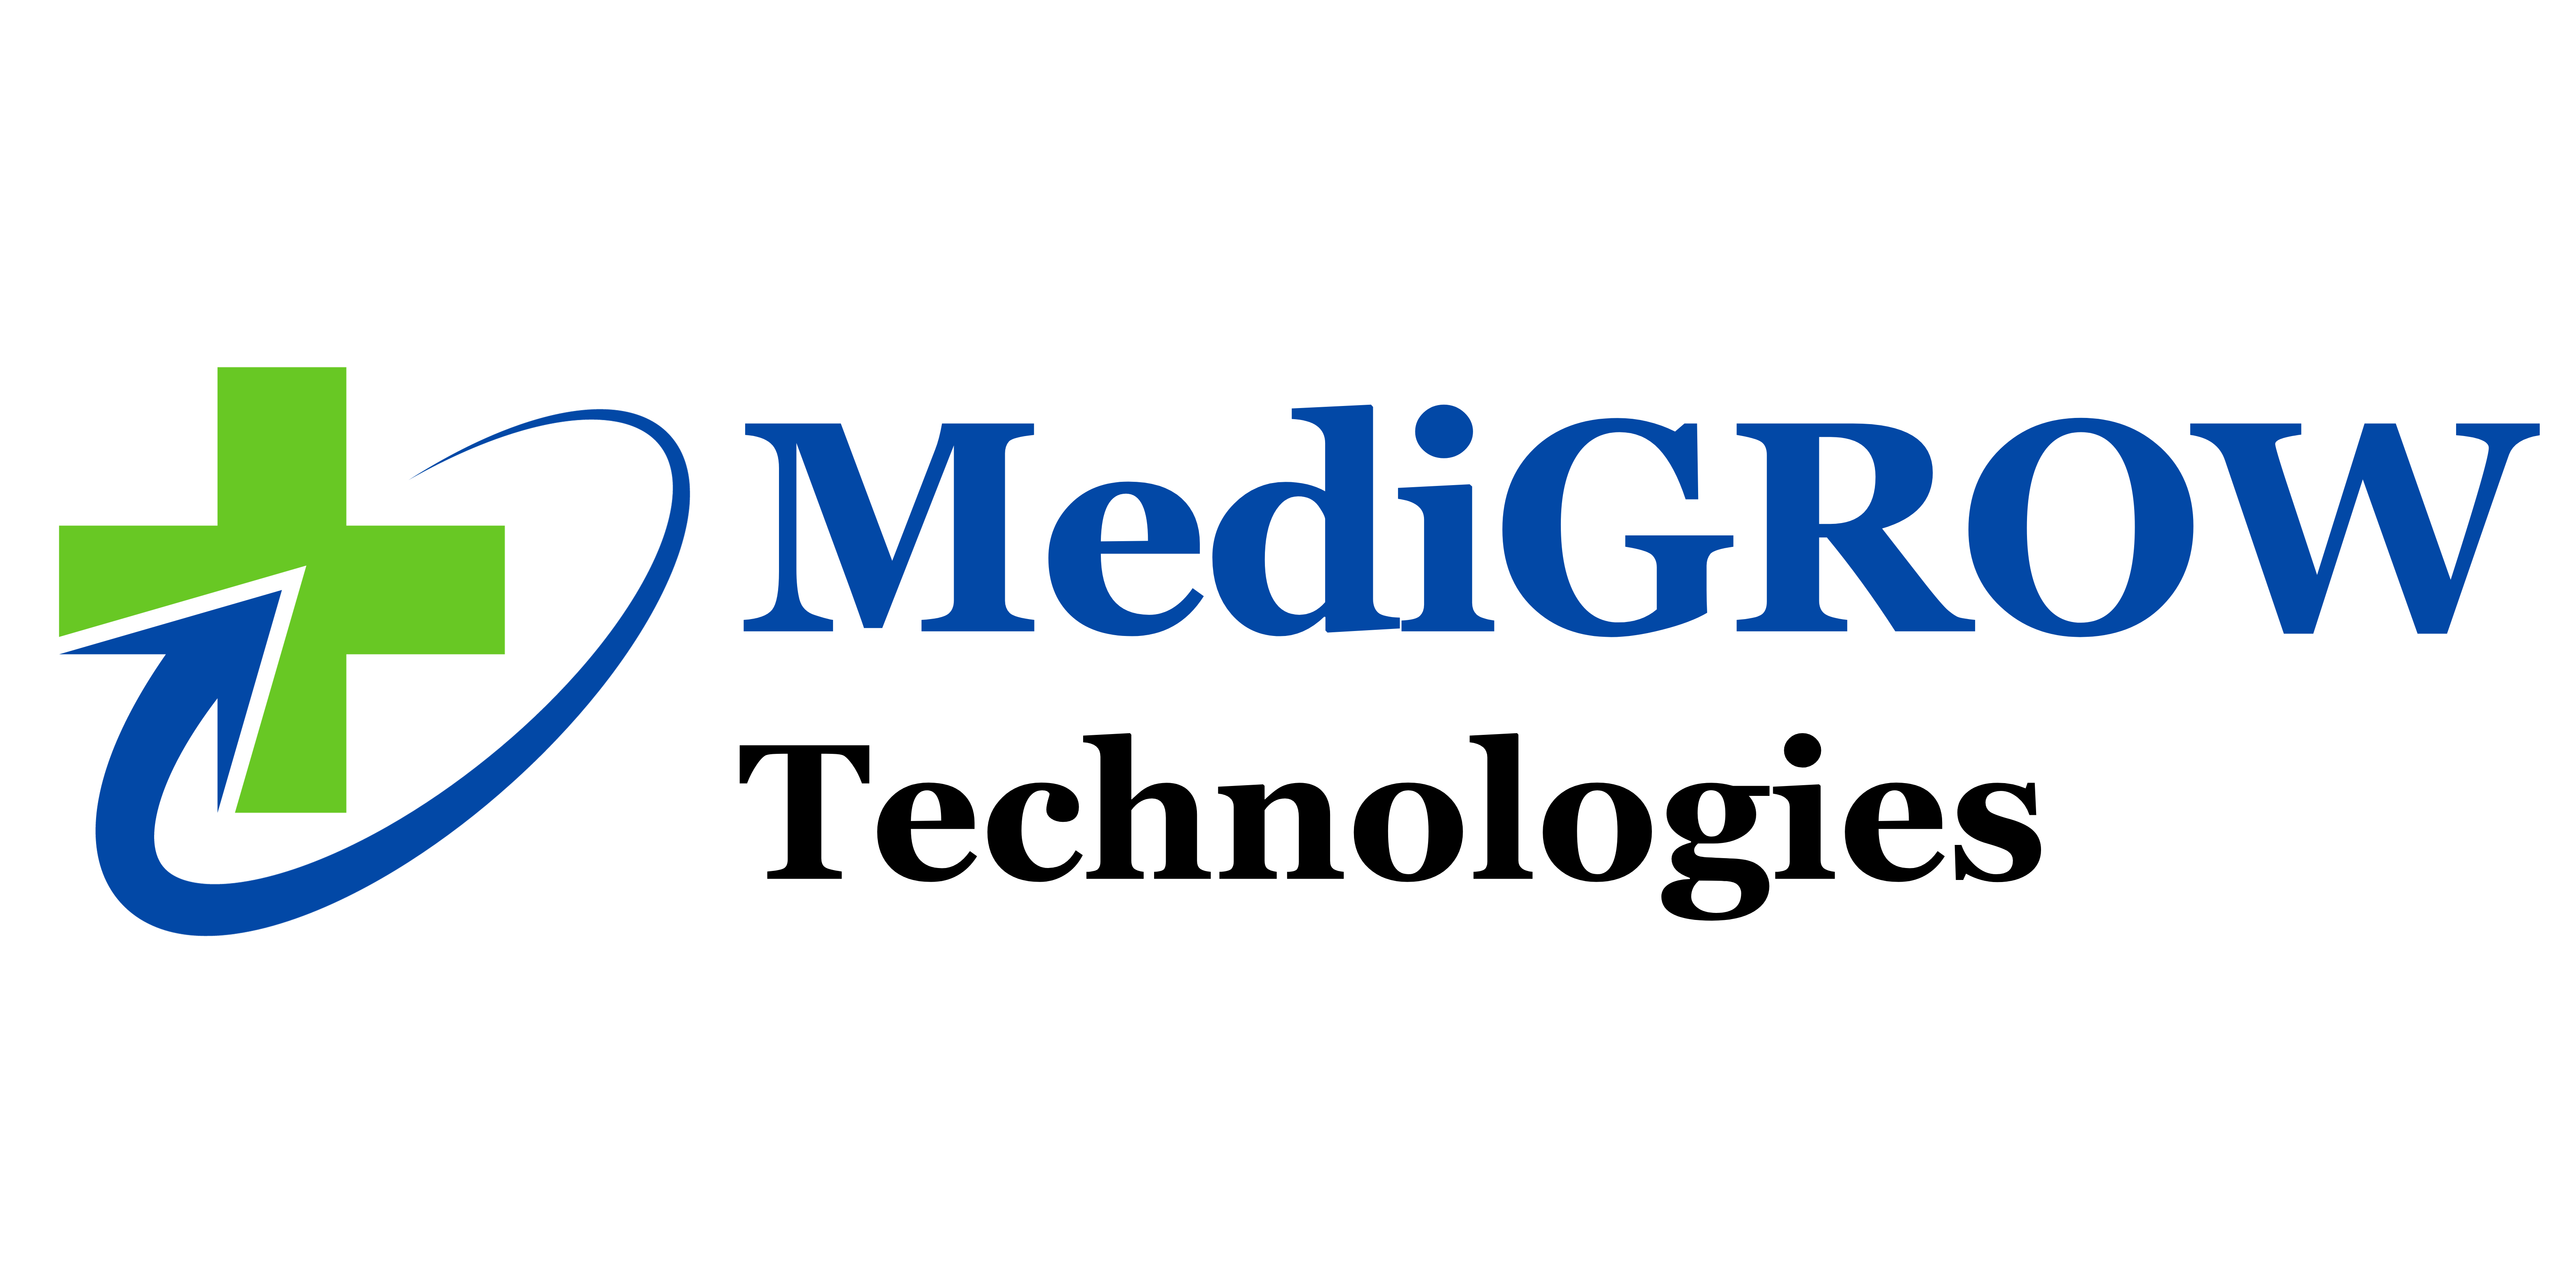 Medigrow Technologies